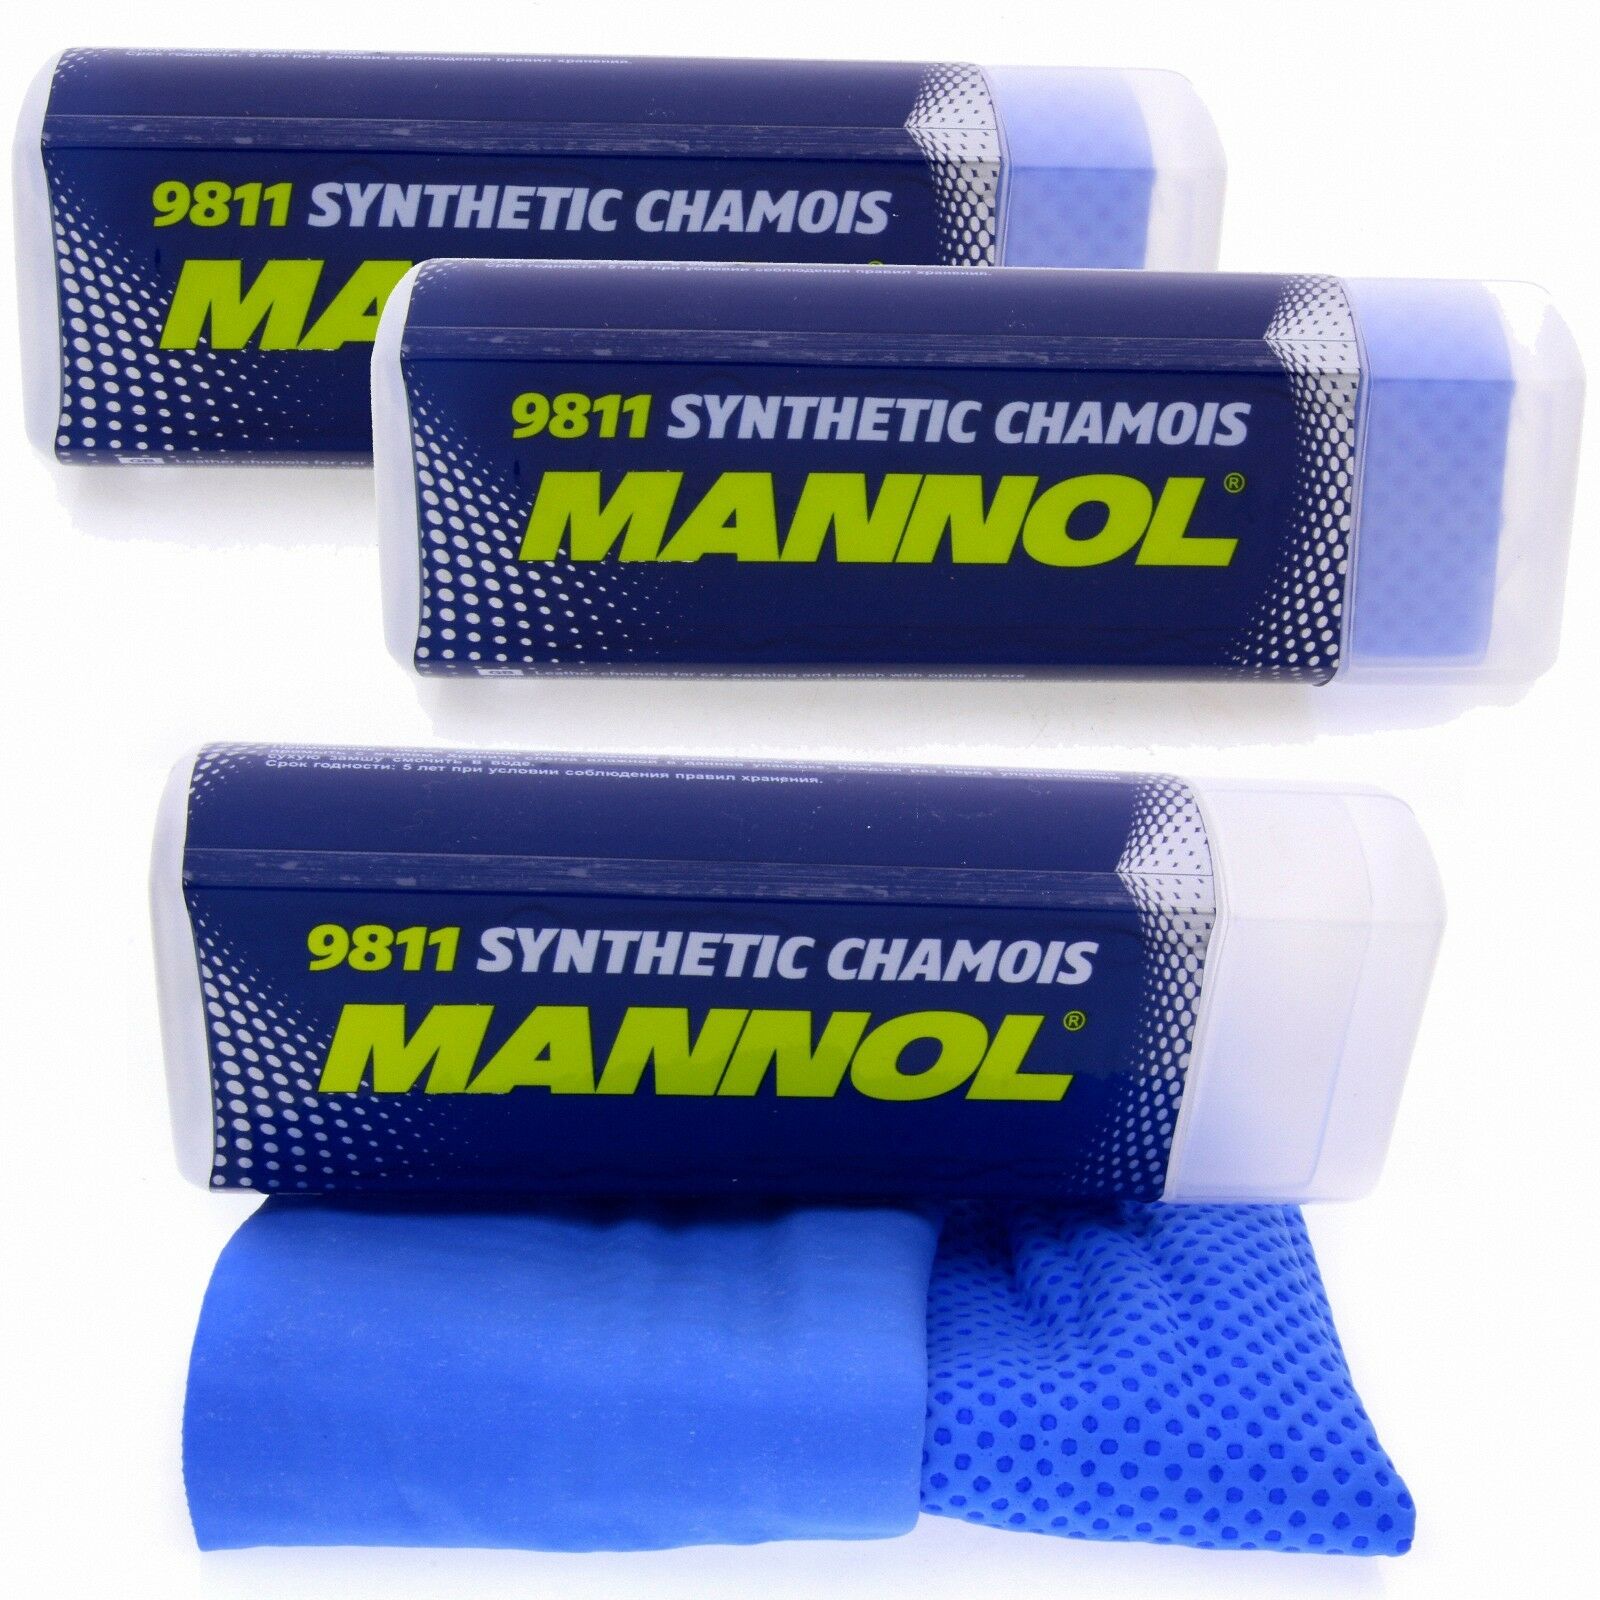 3x MANNOL 9811 Synthetic Chamois Gämse Kunstledertuch Politur Reinigung